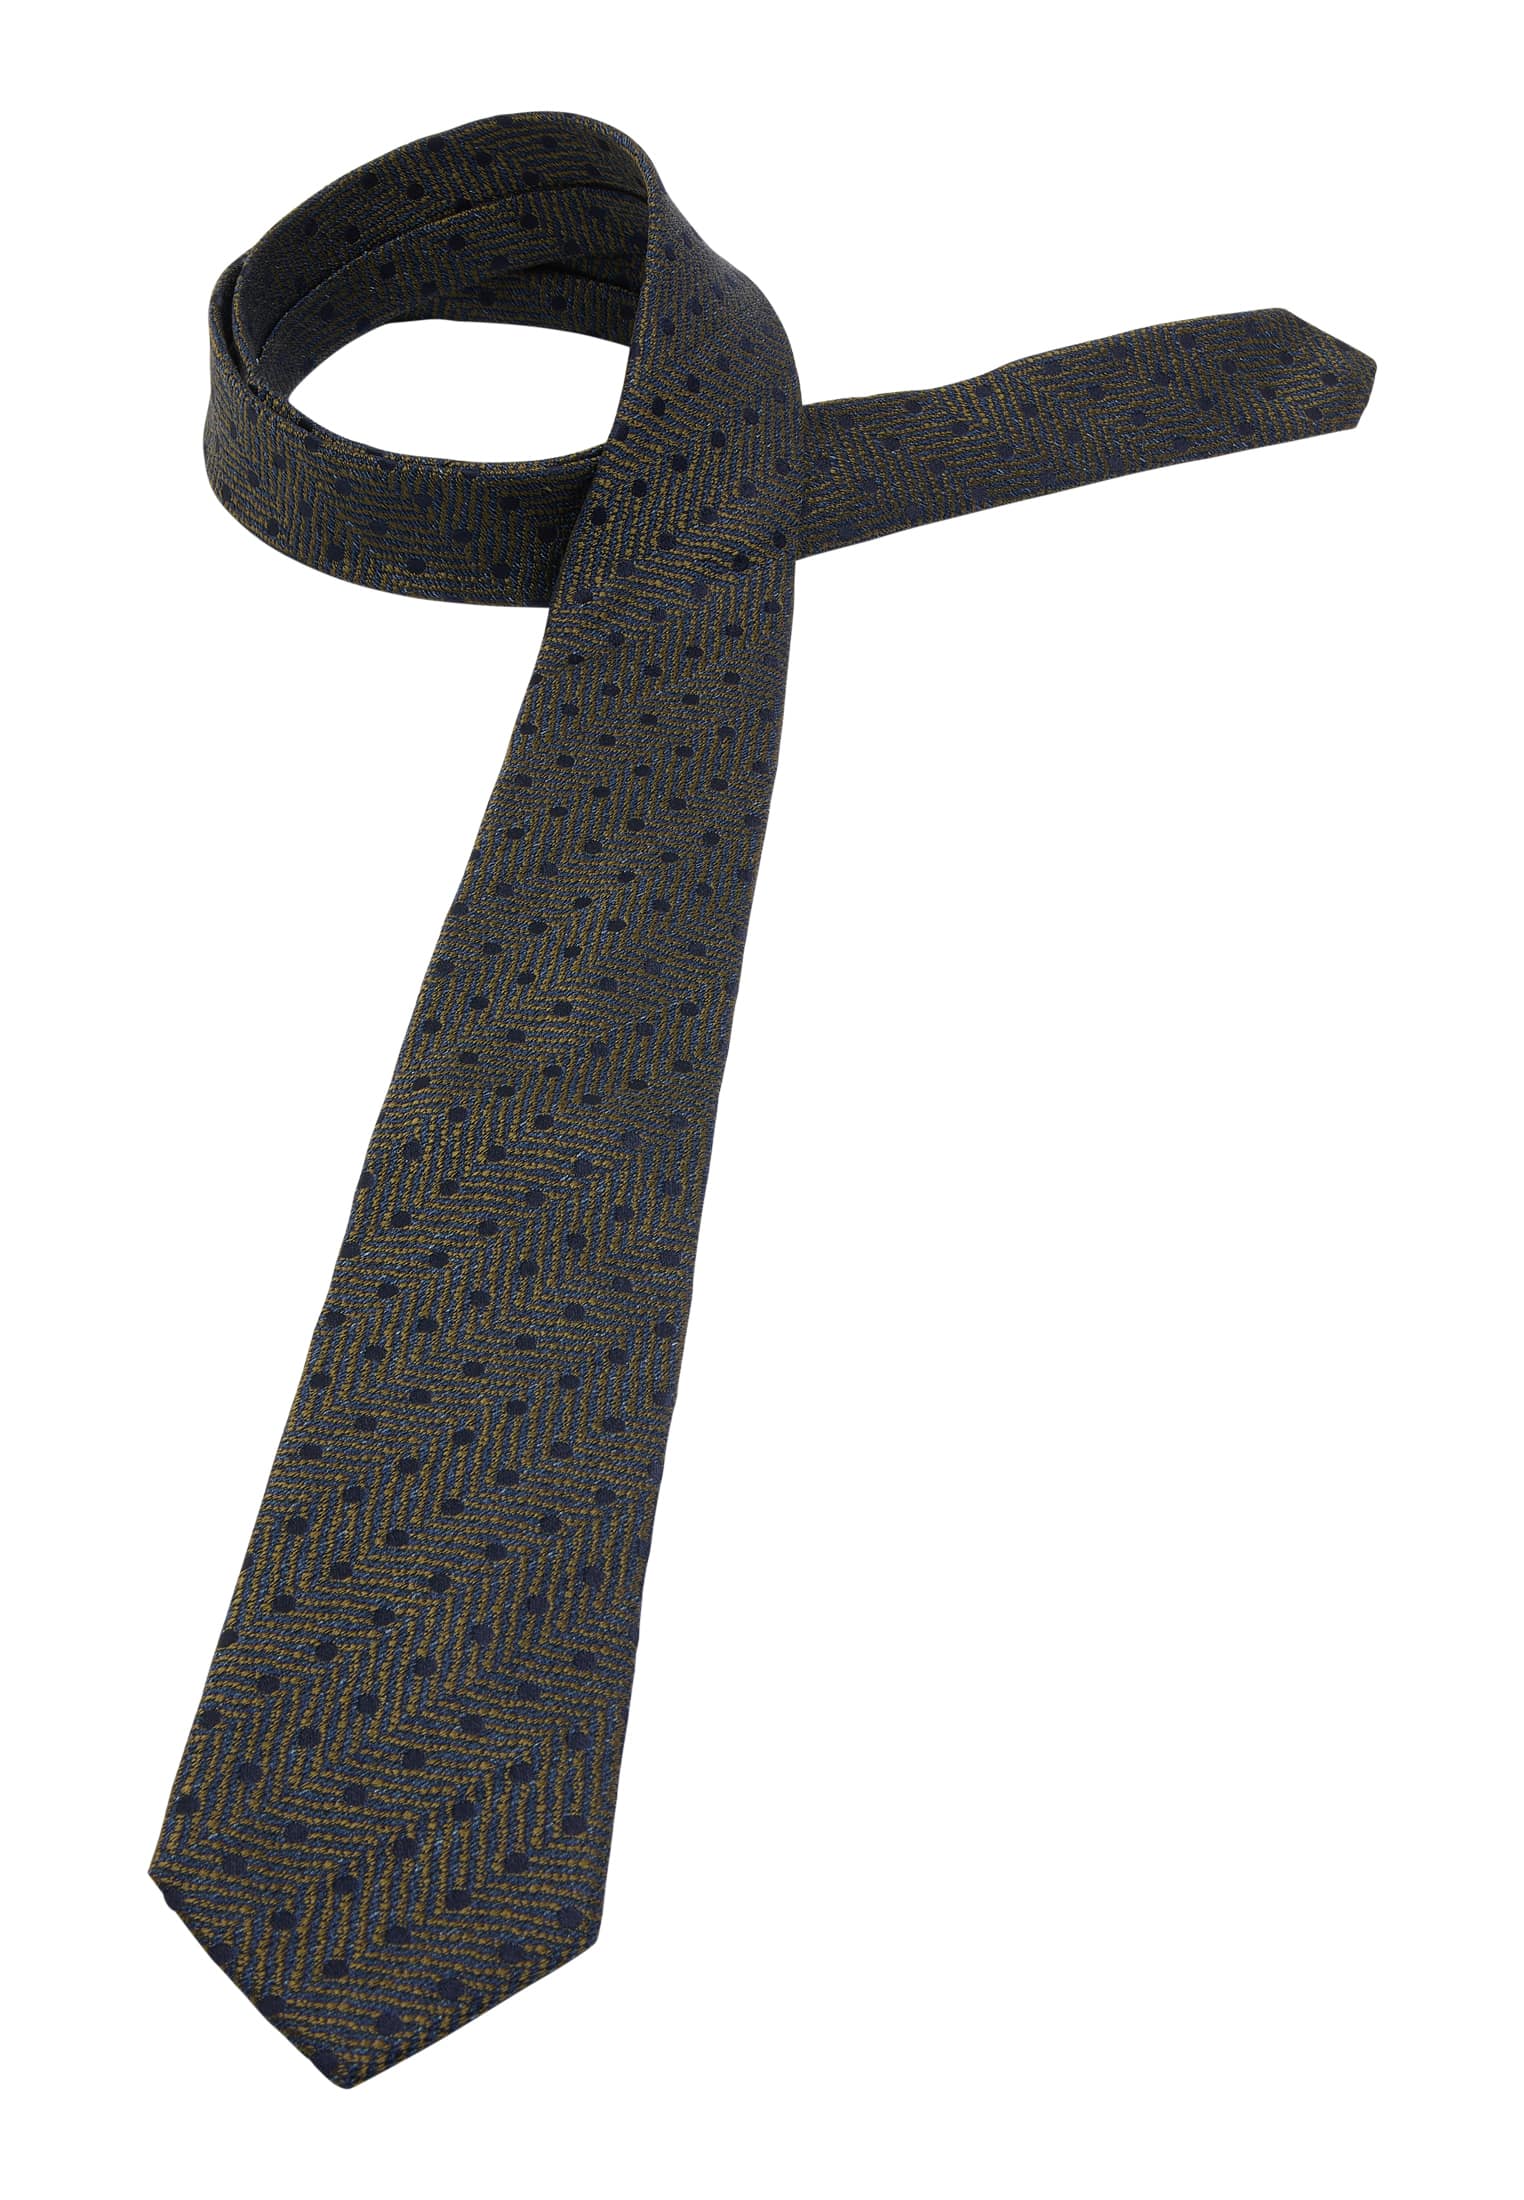 Krawatte in khaki strukturiert 1AC01933-04-52-142 | | | 142 khaki